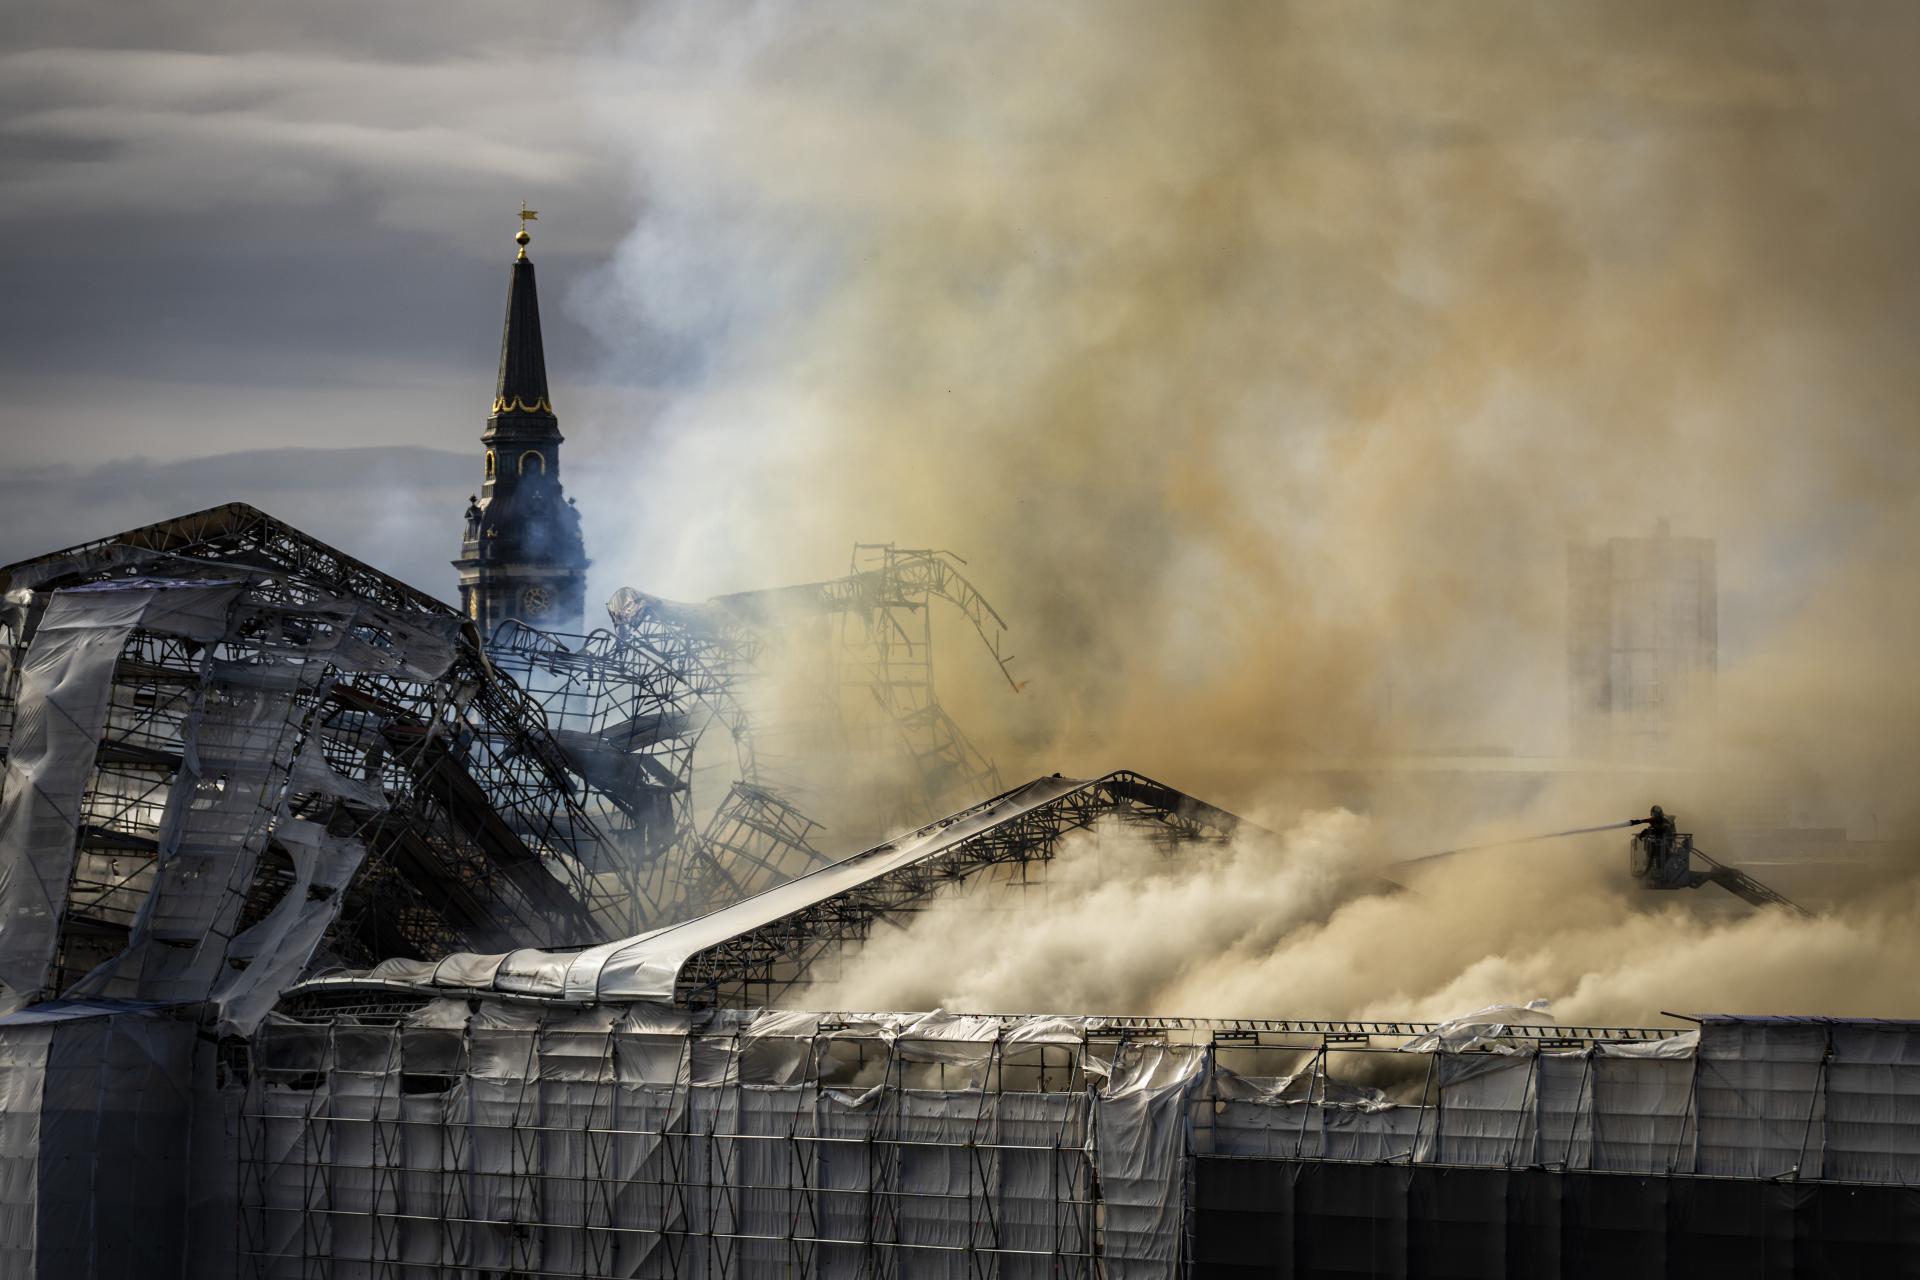 Požiar historickej budovy burzy v Kodani je pod kontrolou. Postavia ju nanovo